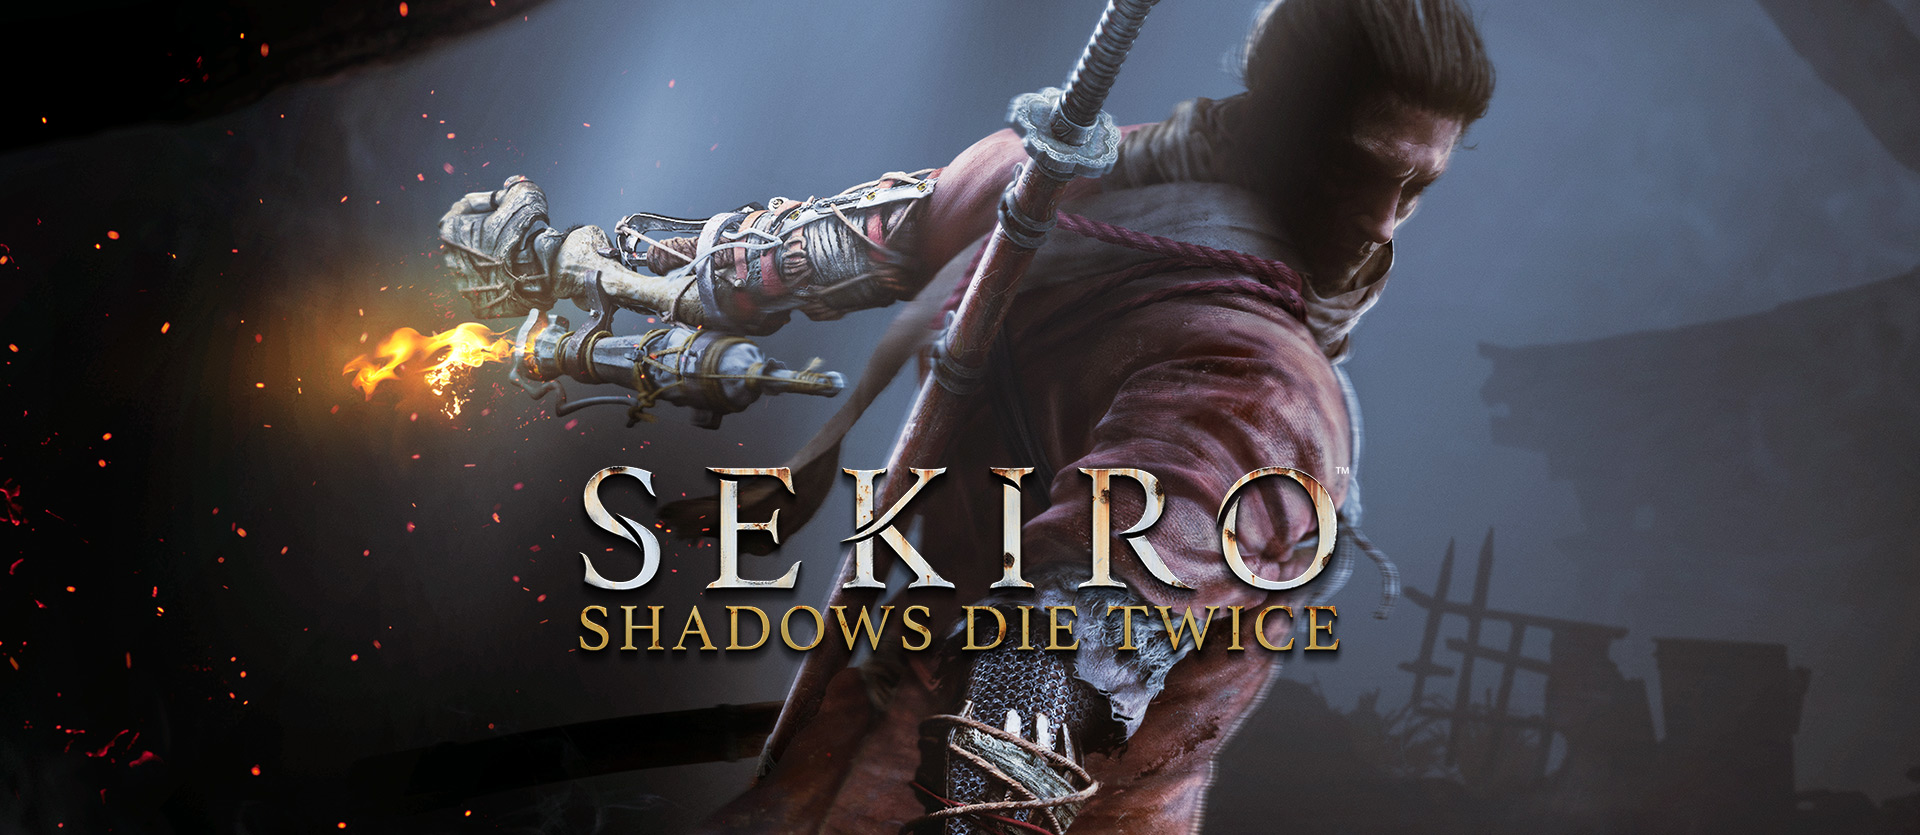 Sekiro Shadows Die Twice Esrb Rating 